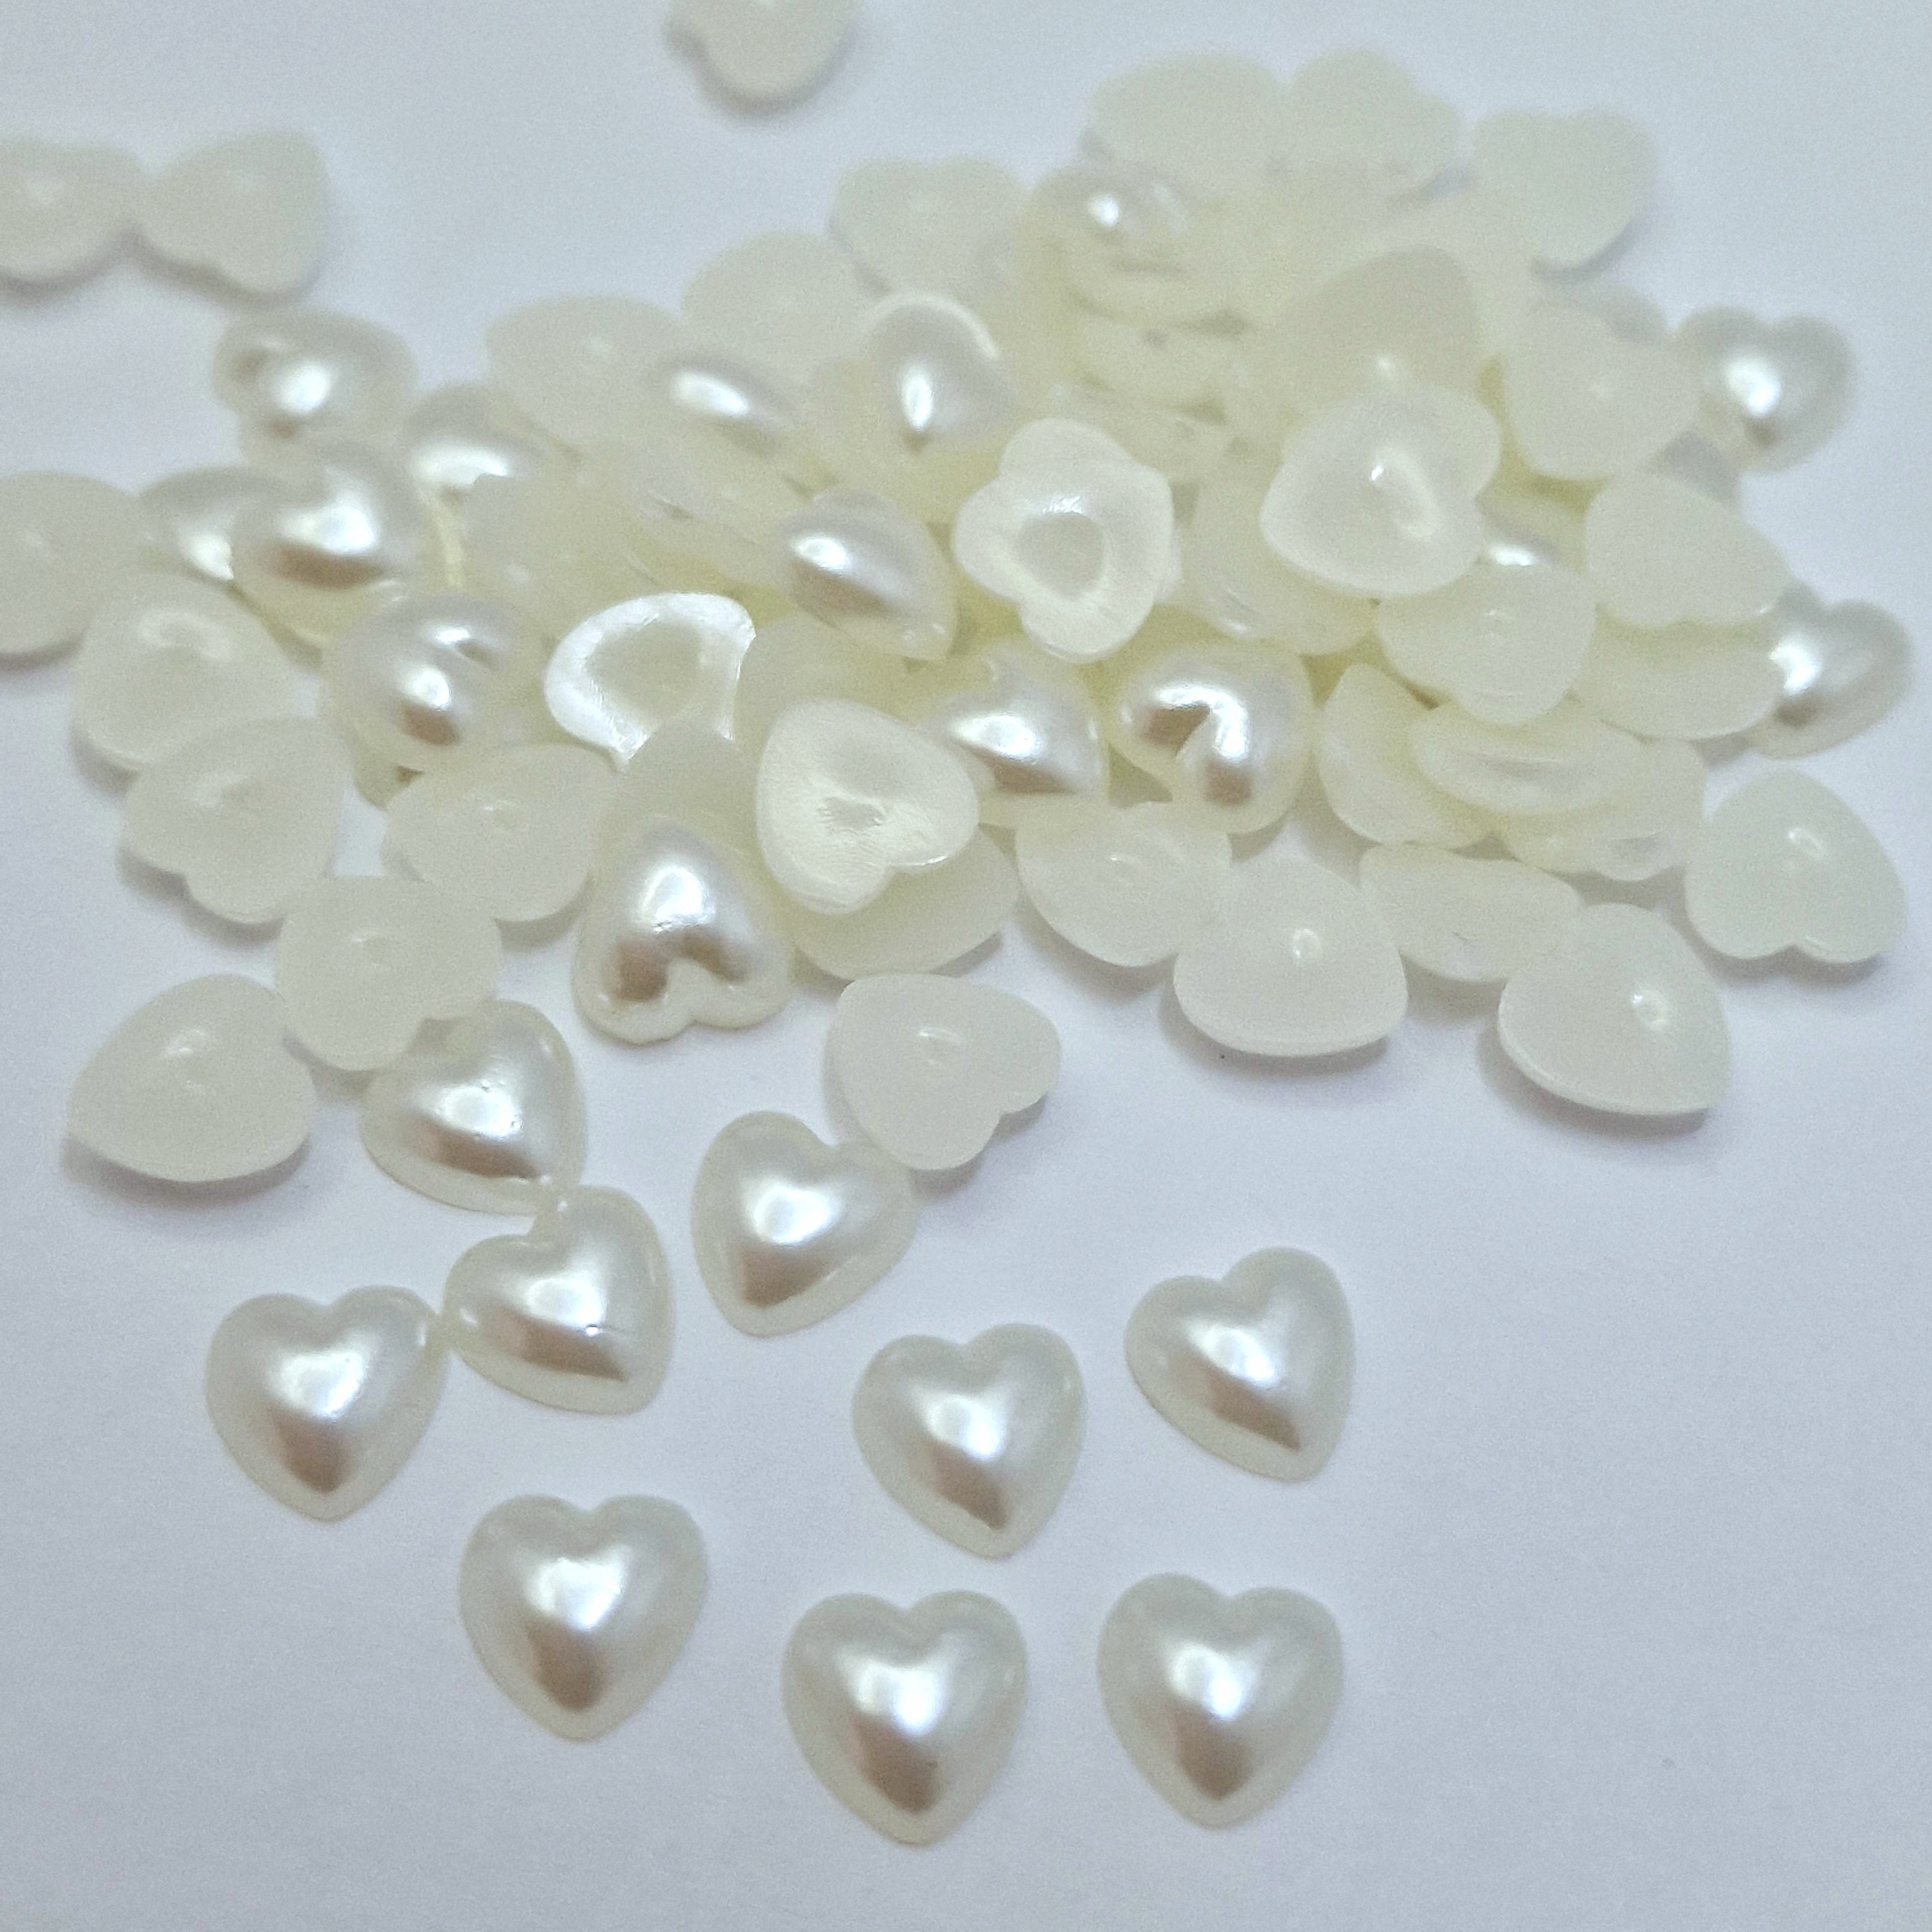 MajorCrafts 240pcs 8mm Cream Ivory Flat Back Heart Resin Embellishment Pearls